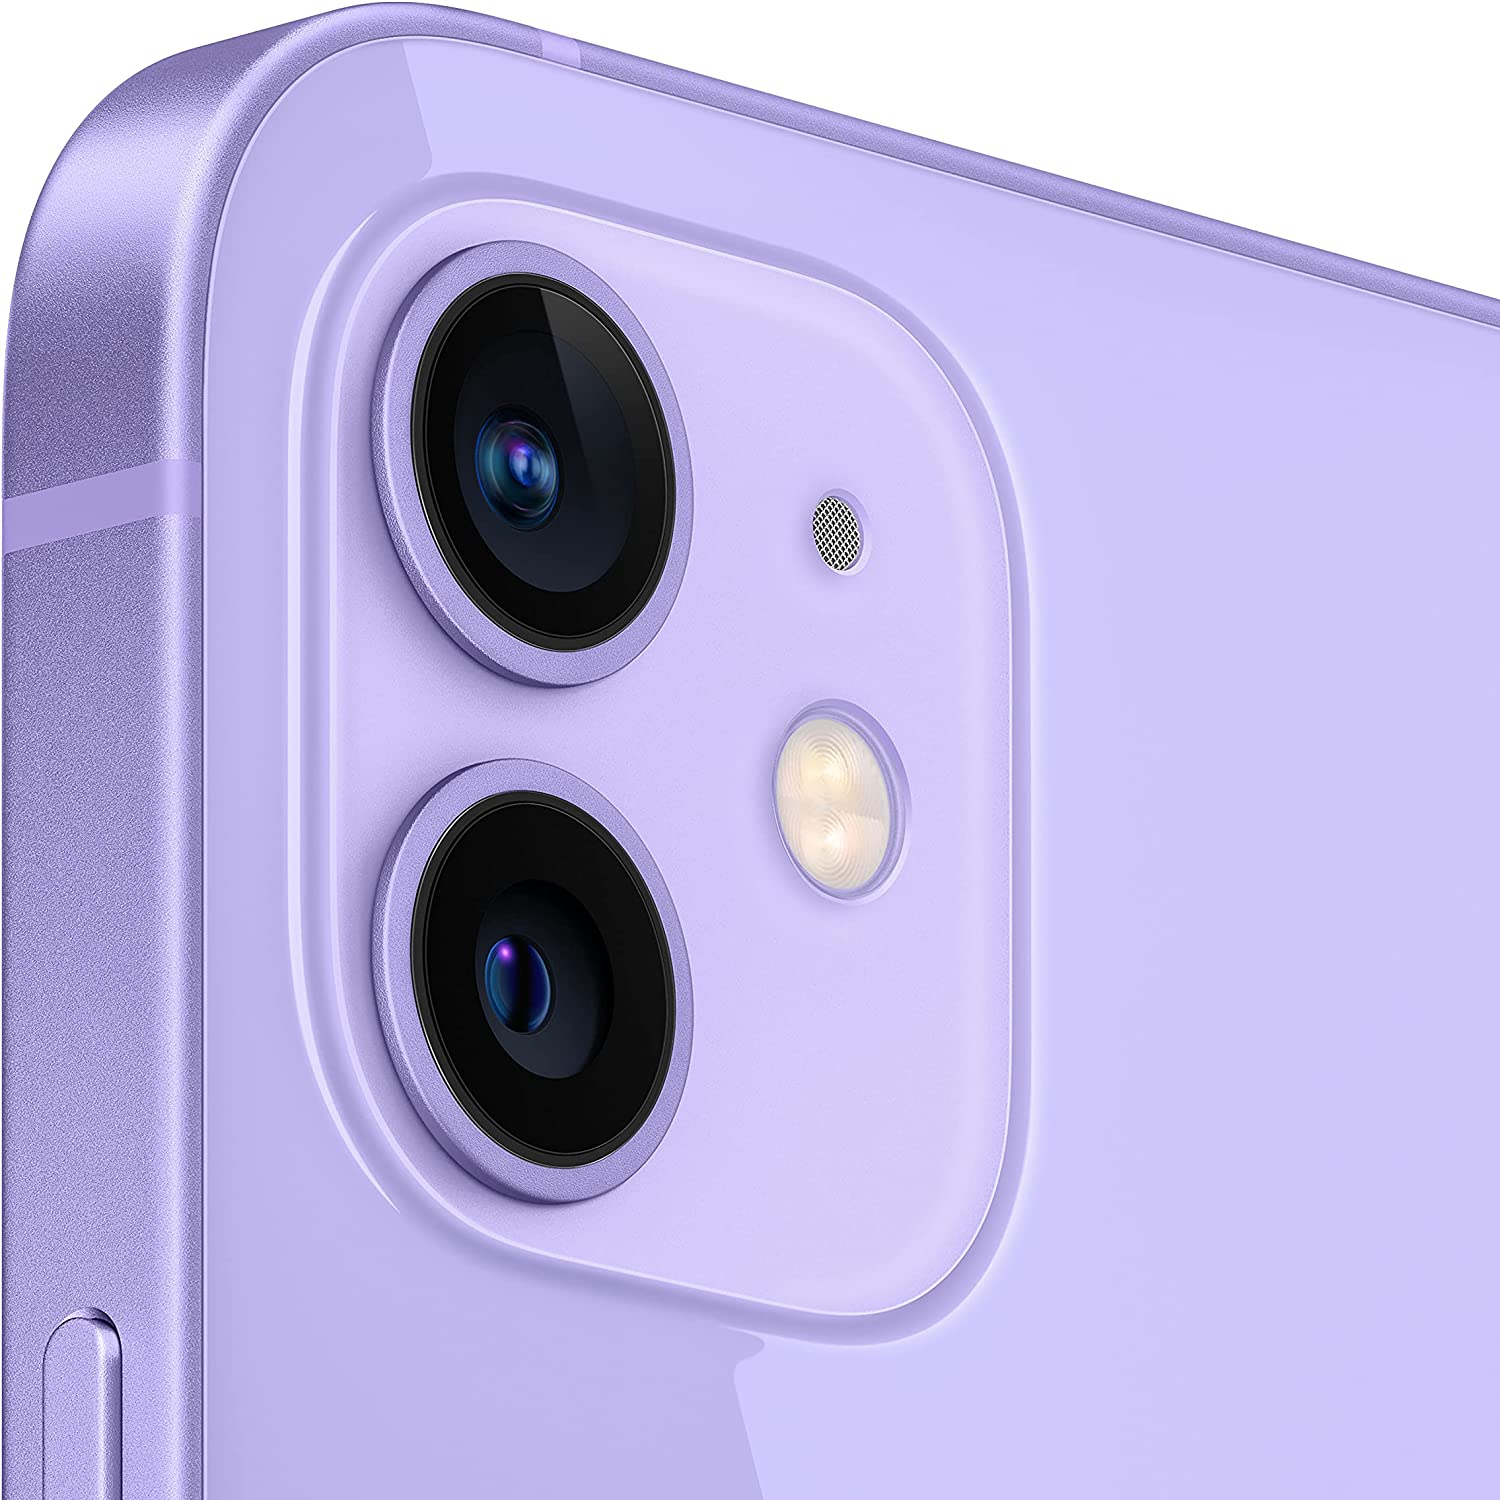 Apple iPhone 12 64GB Púrpura